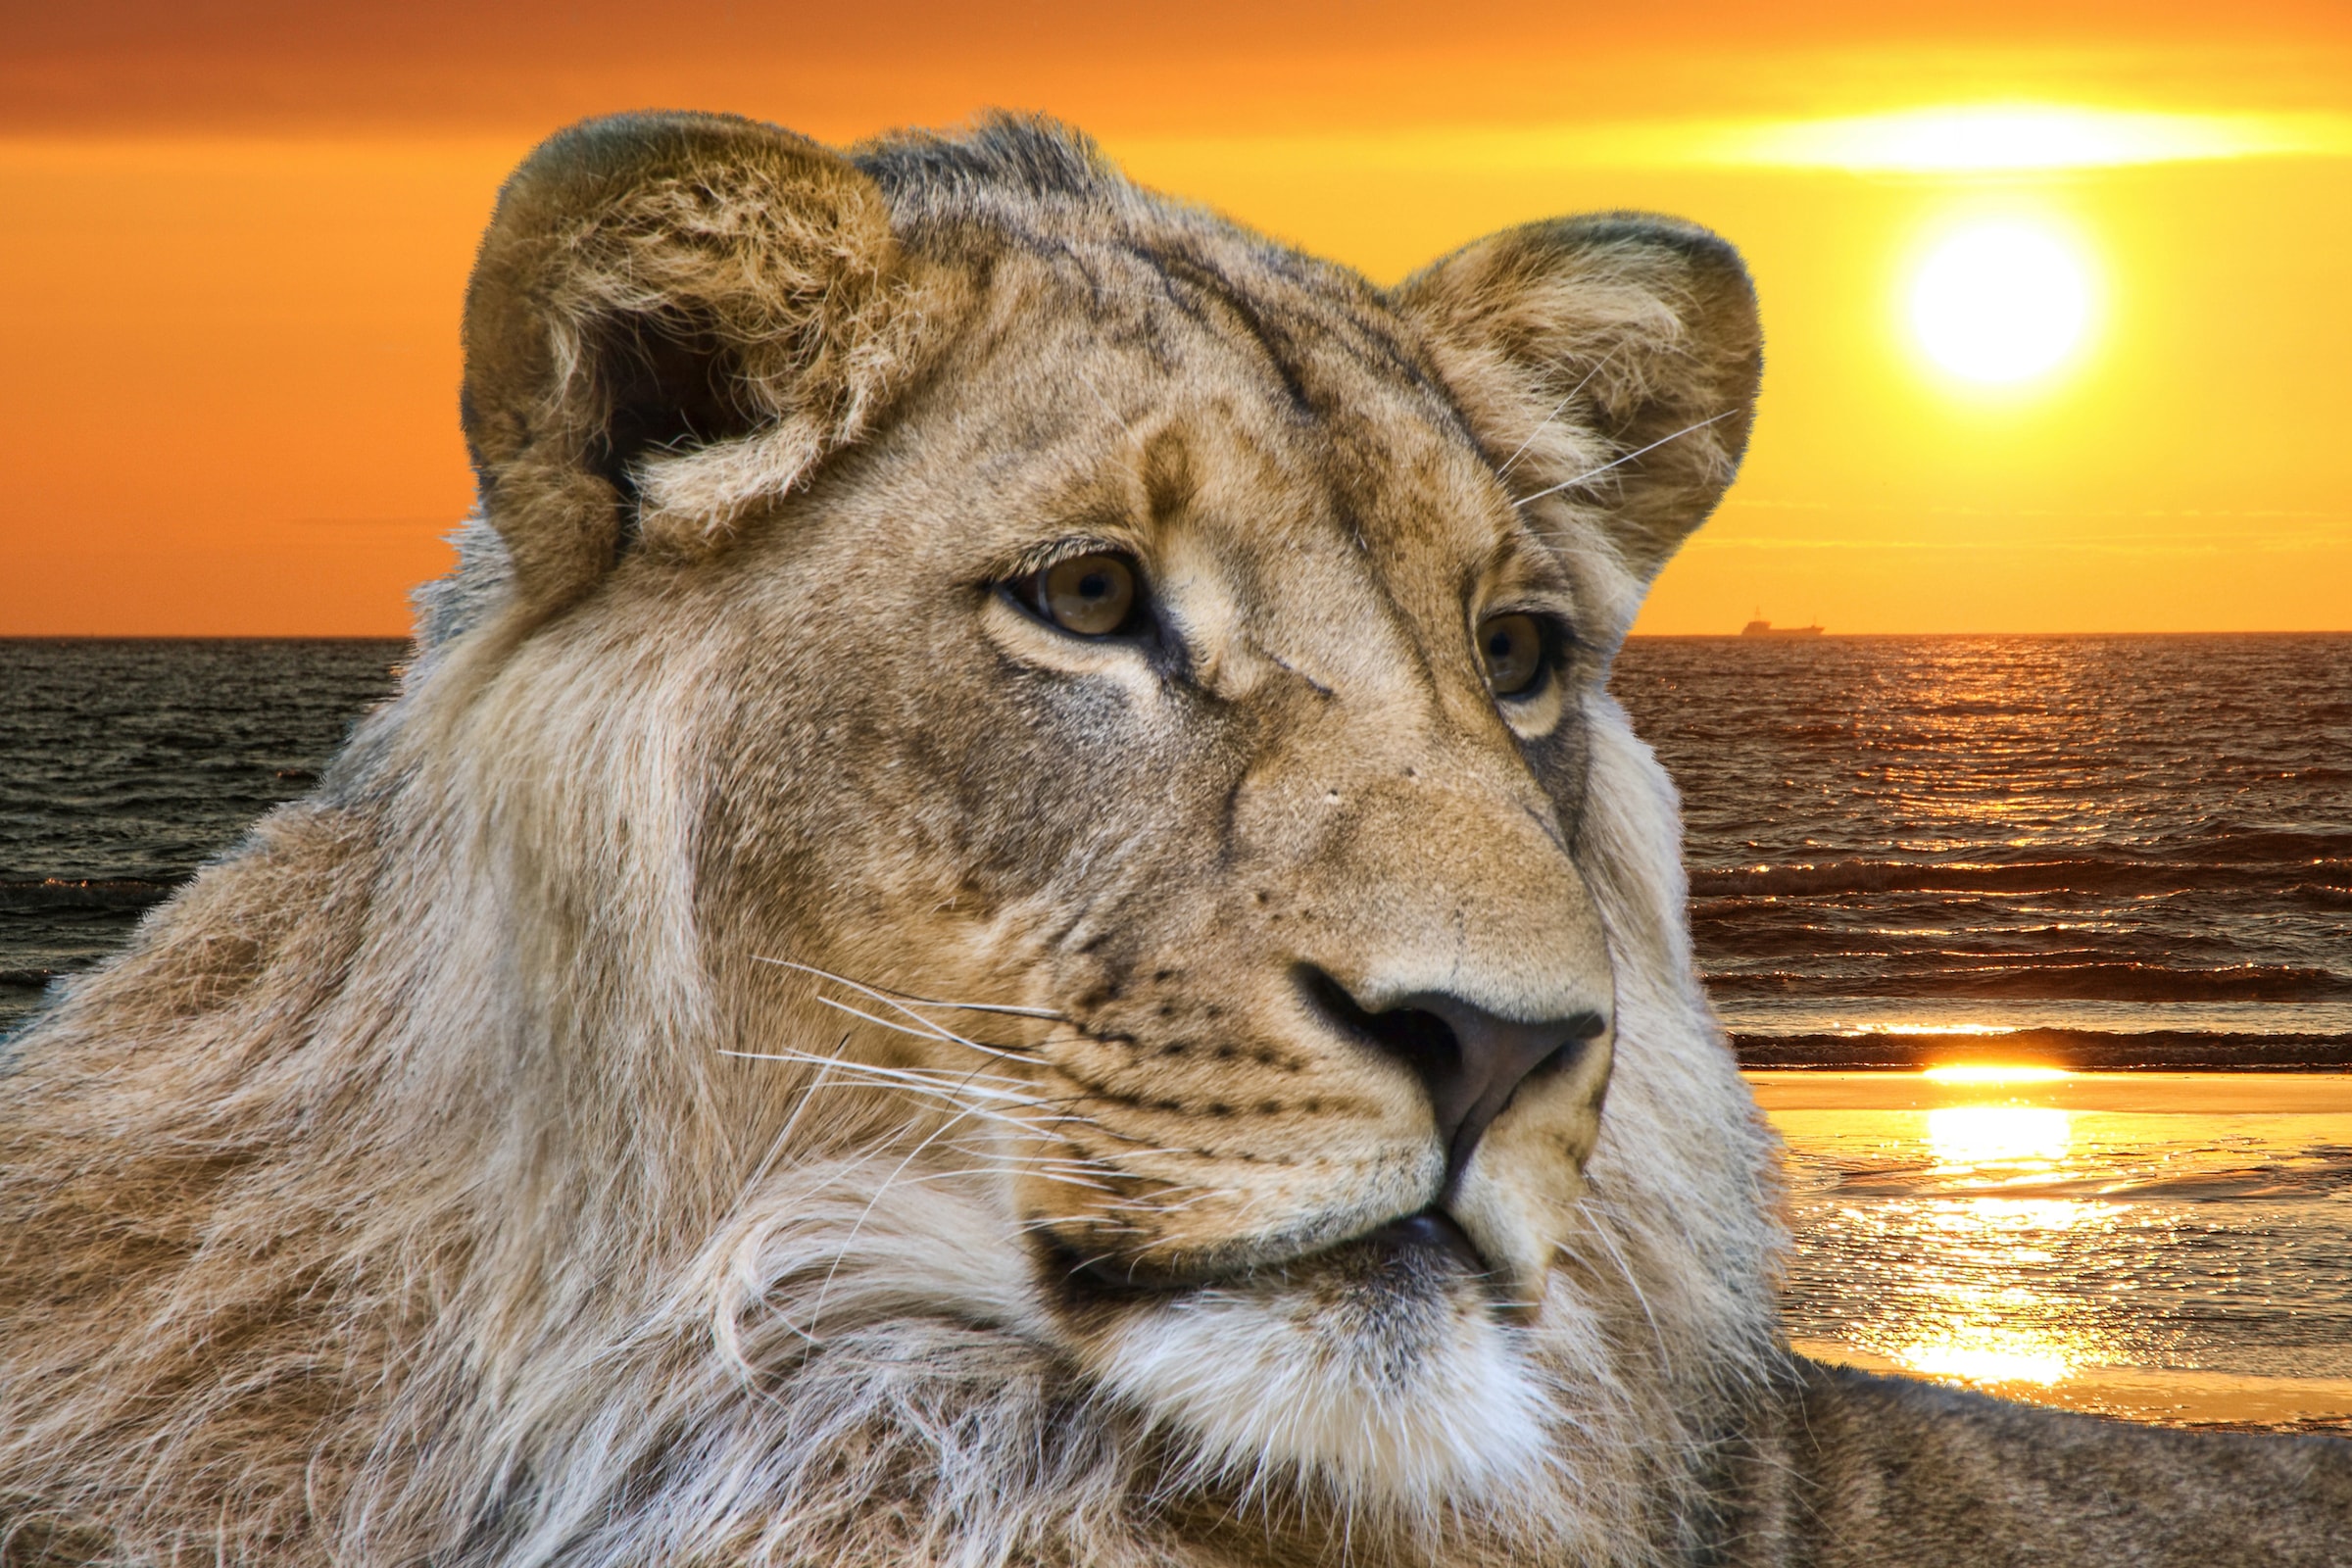 Papermoon Fototapete "Lion in Sunset"